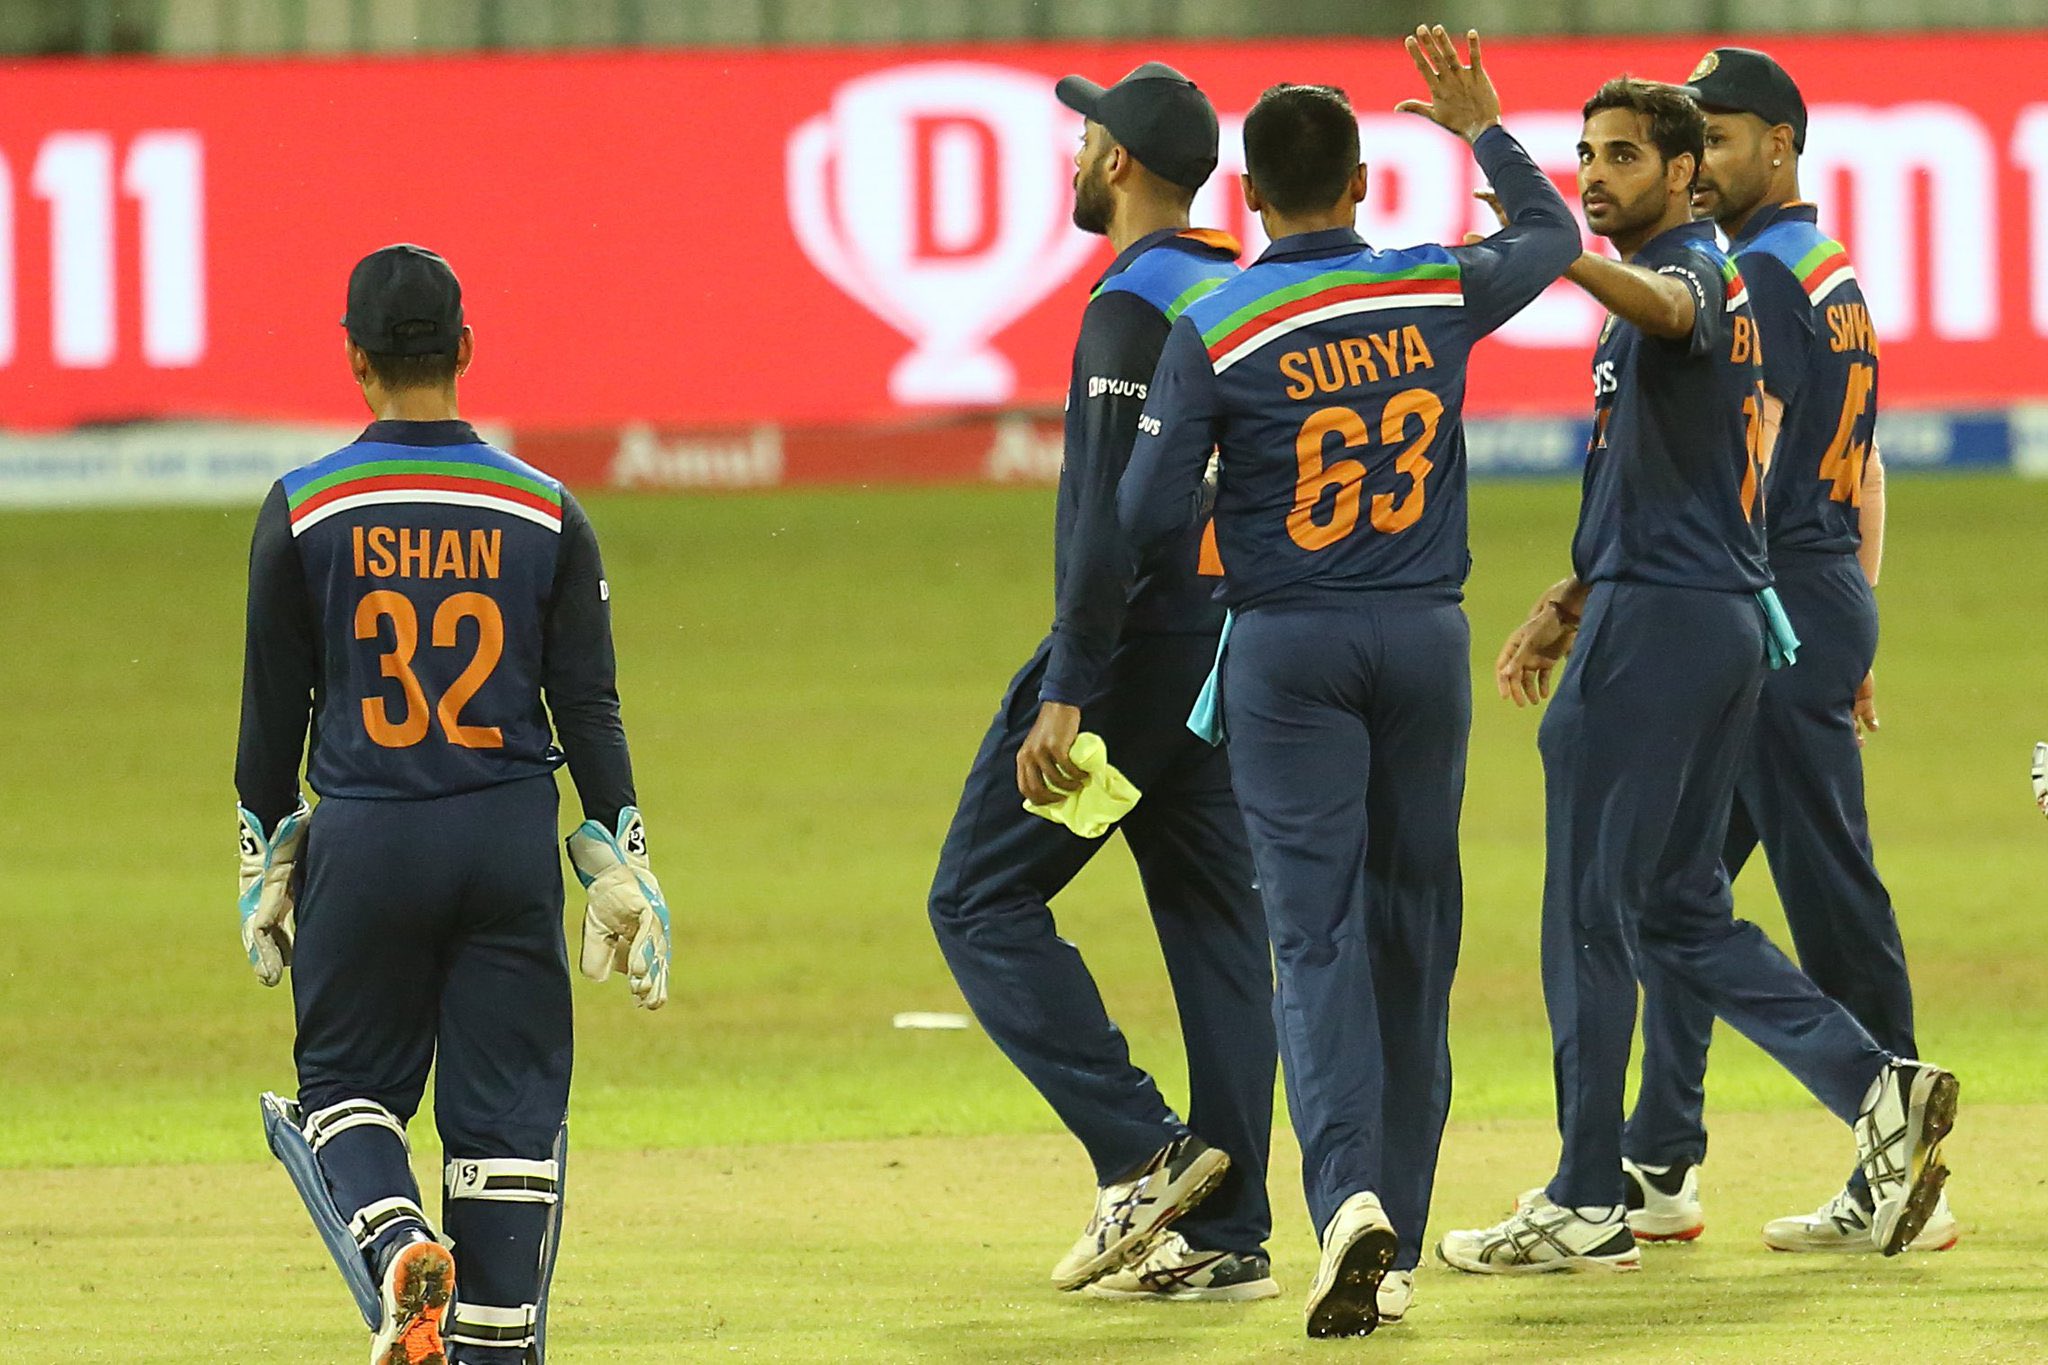 Bhuvneshwar Kumar ran through the Sri Lankan batting line-up | BCCI